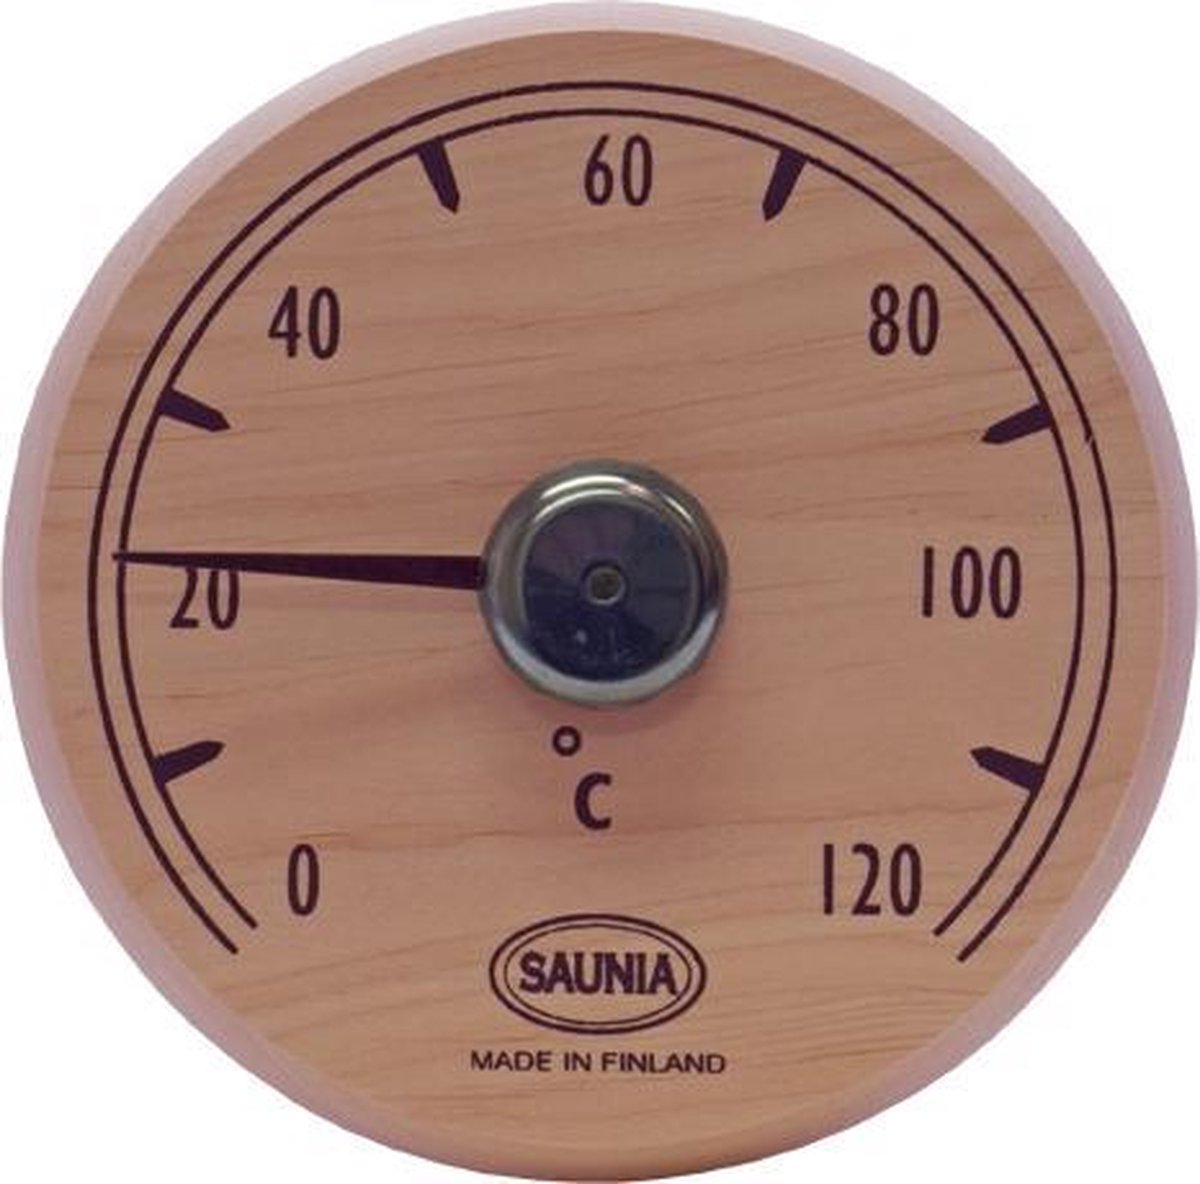 Saunia - Thermometer - Rond model - saunia